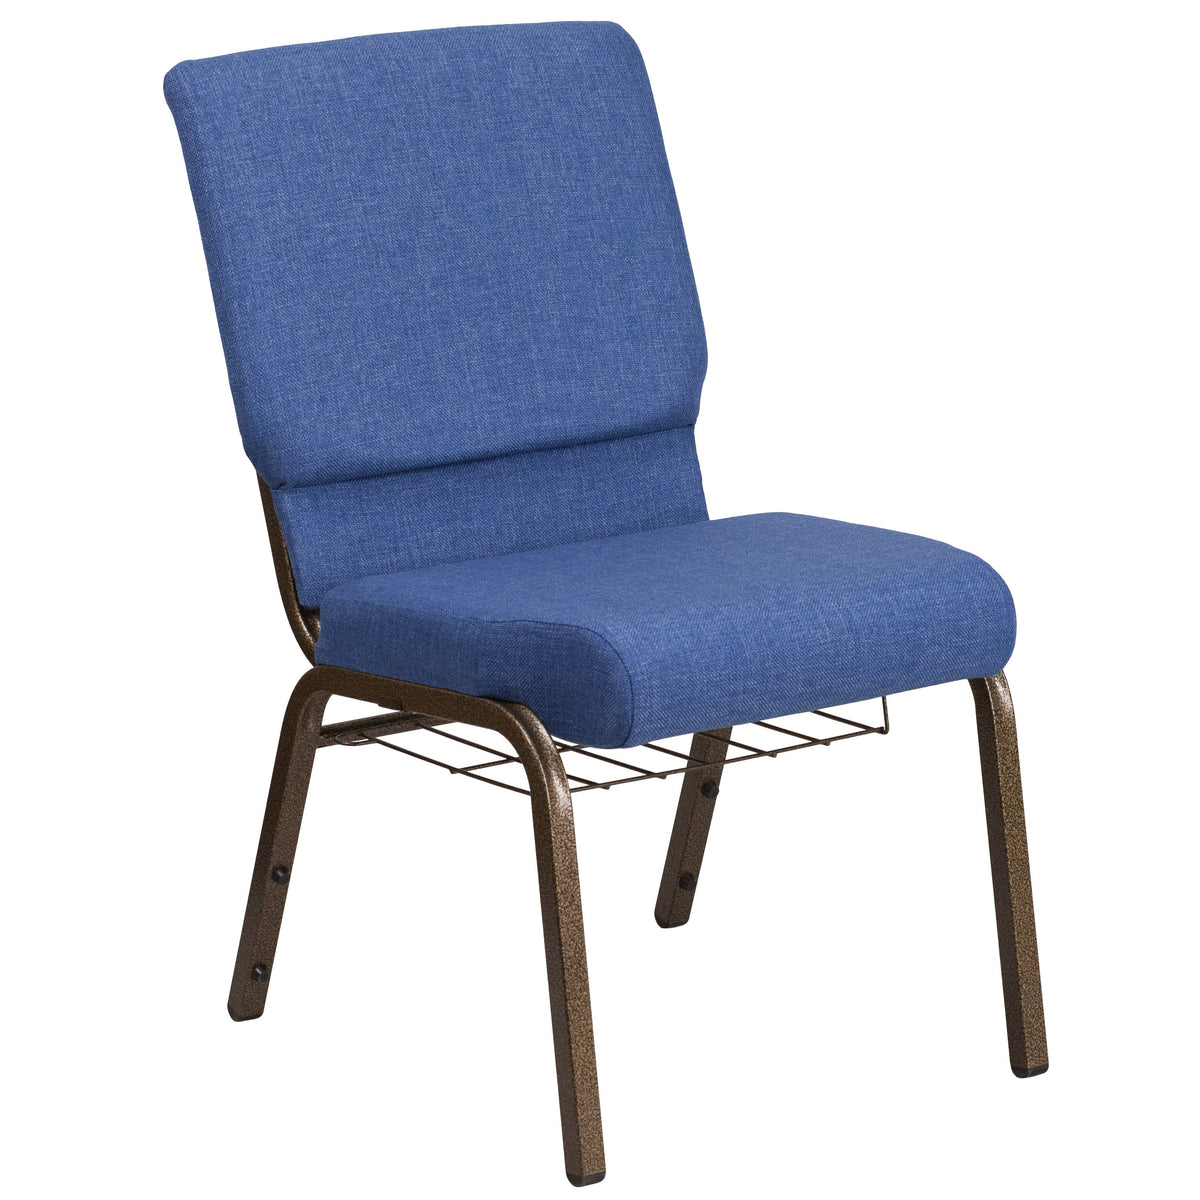 Blue Fabric/Gold Vein Frame |#| 18.5inchW Church Chair in Blue Fabric with Cup Book Rack - Gold Vein Frame